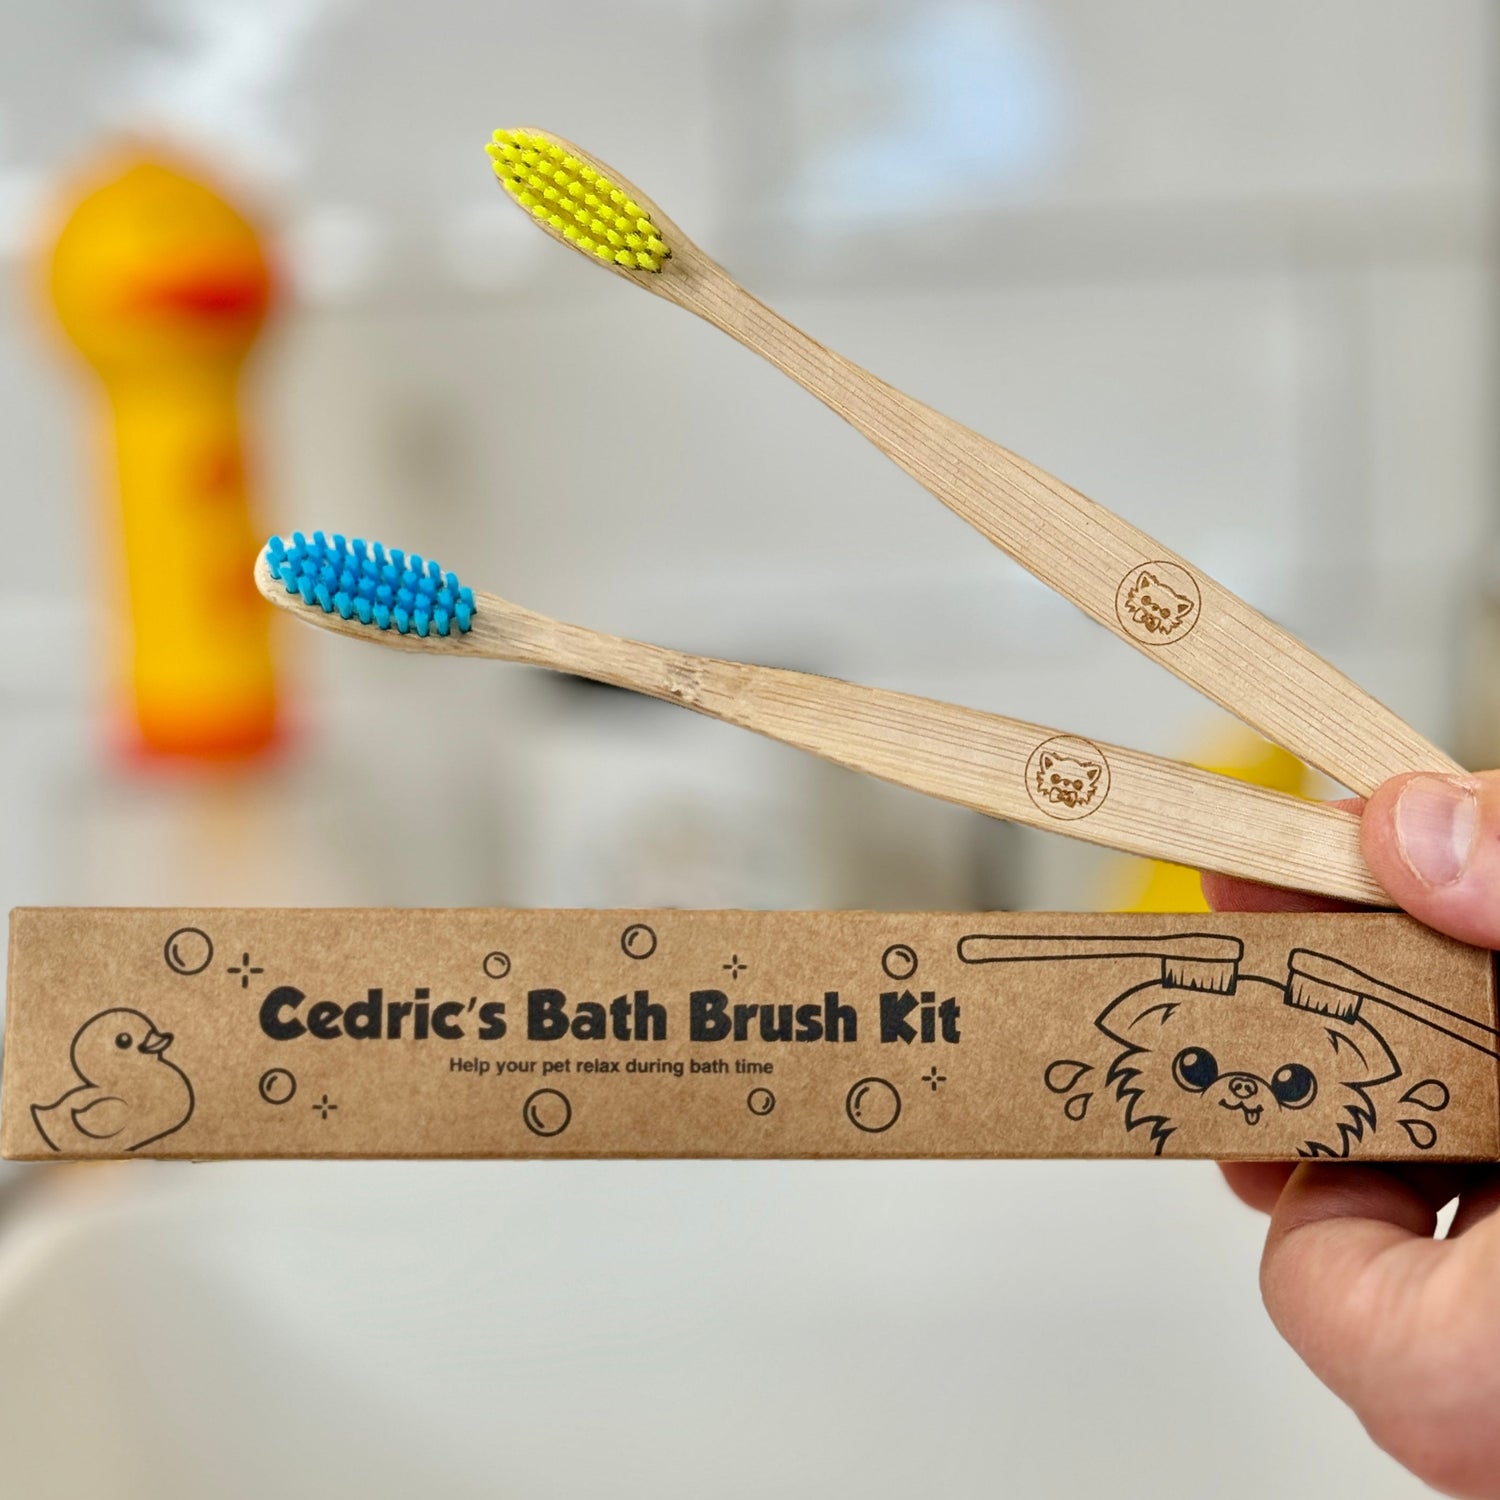 Overview of Cedric's Bath Brush Kit